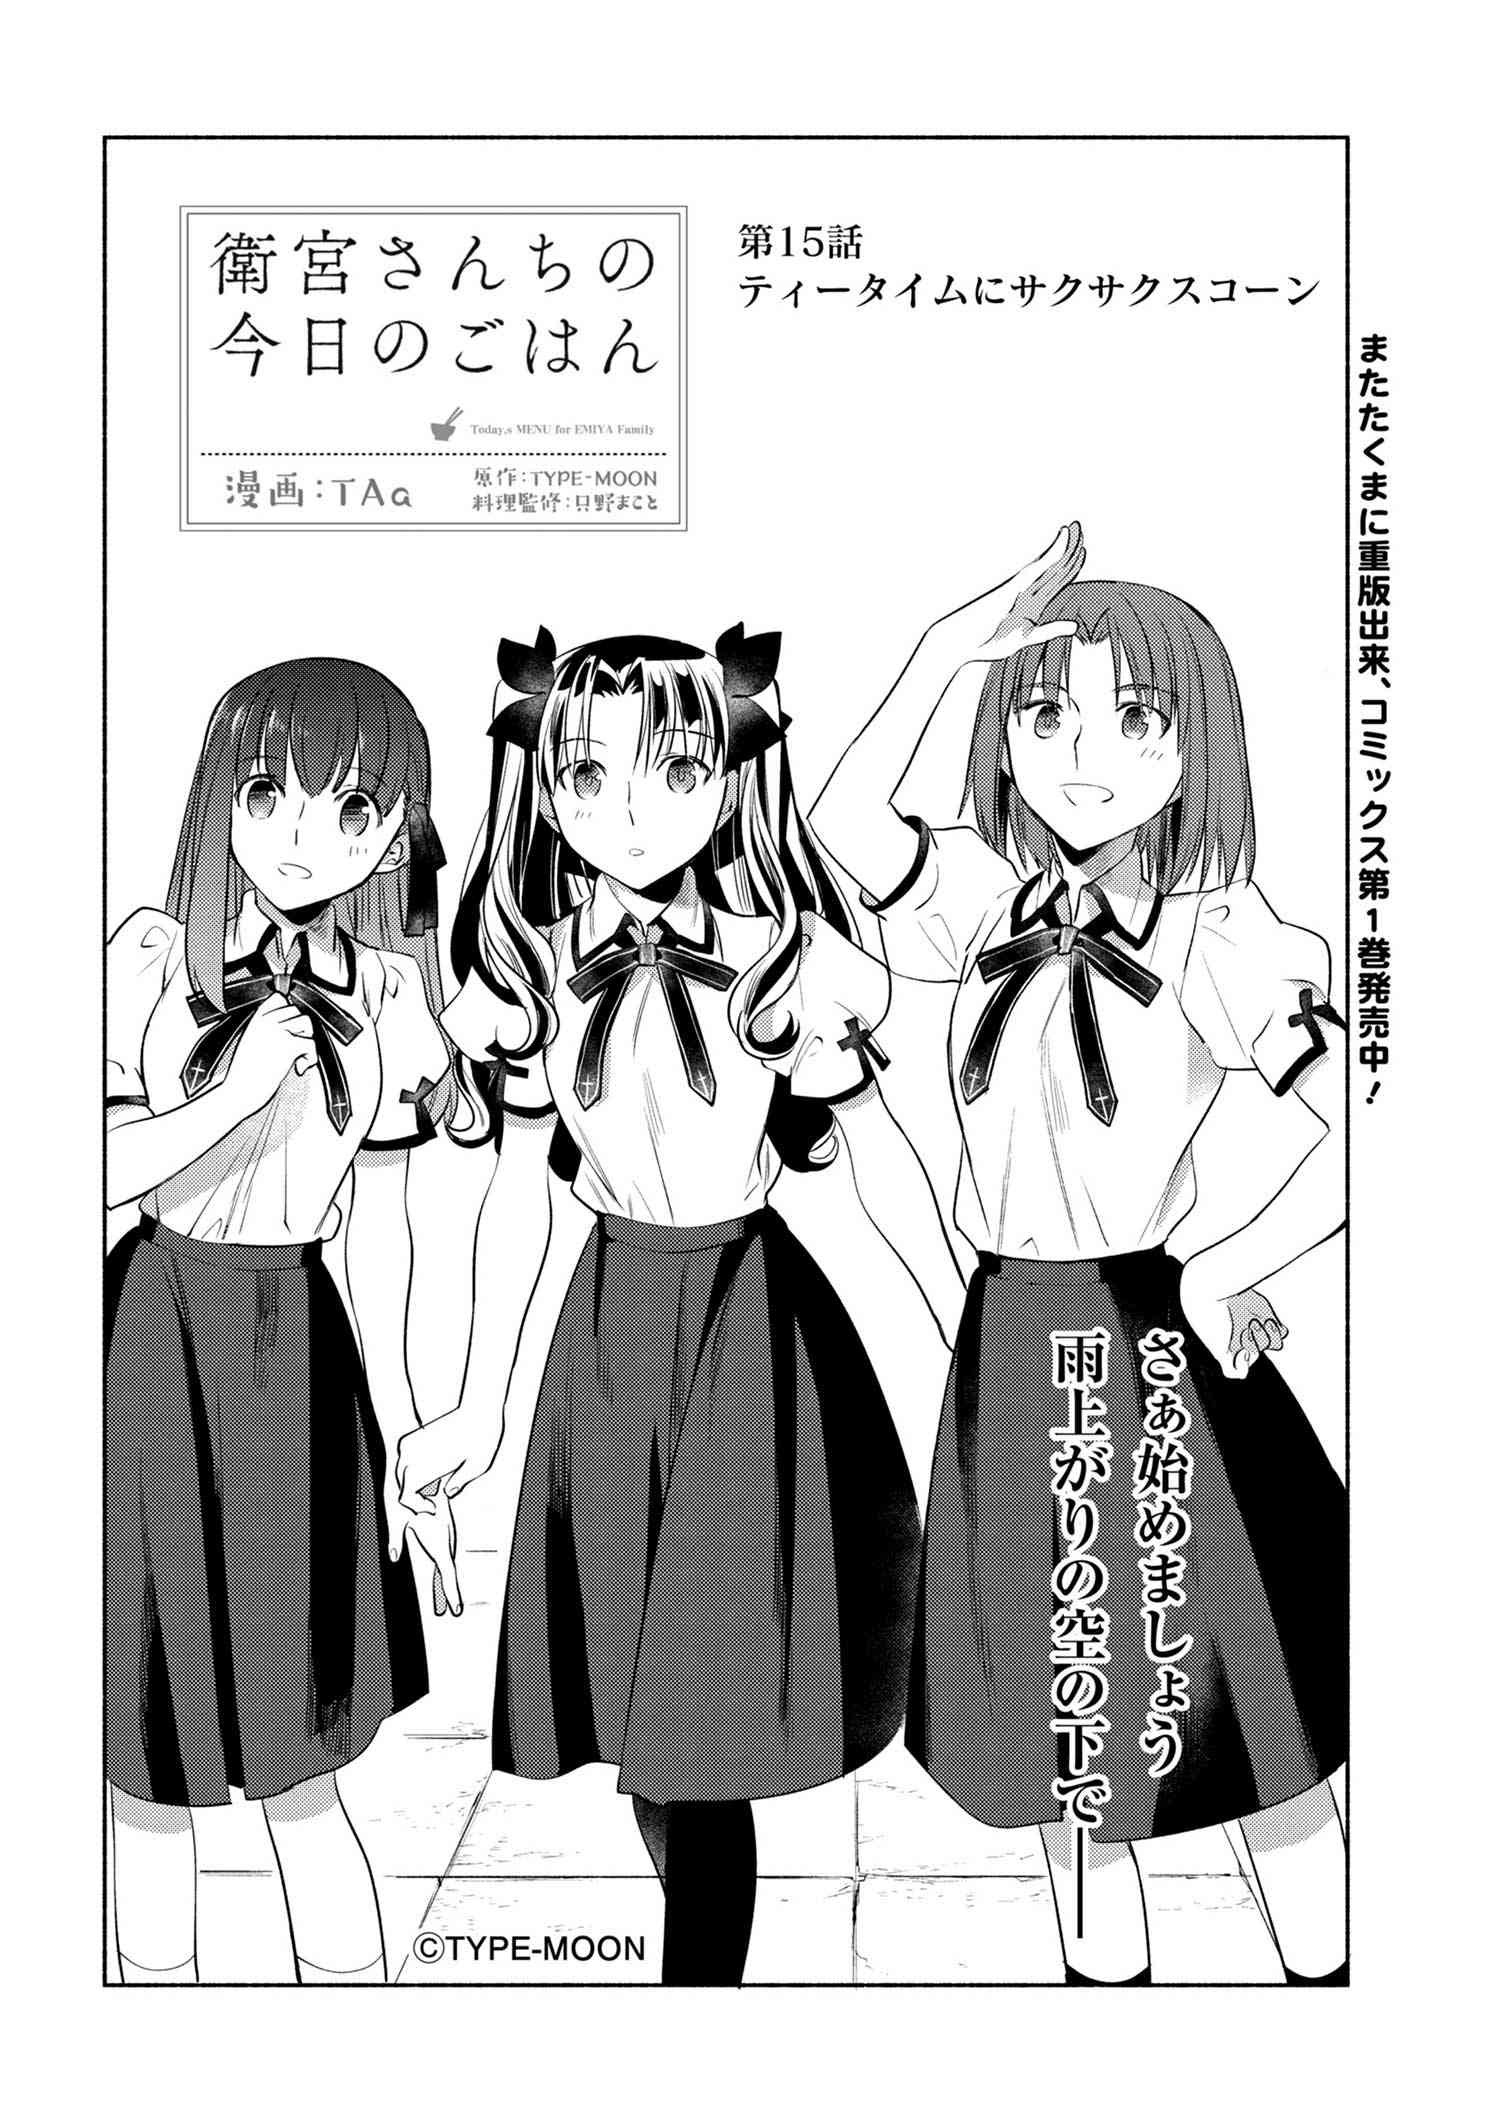 Emiya-san Chi no Kyou no Gohan - Chapter 15 - Page 2